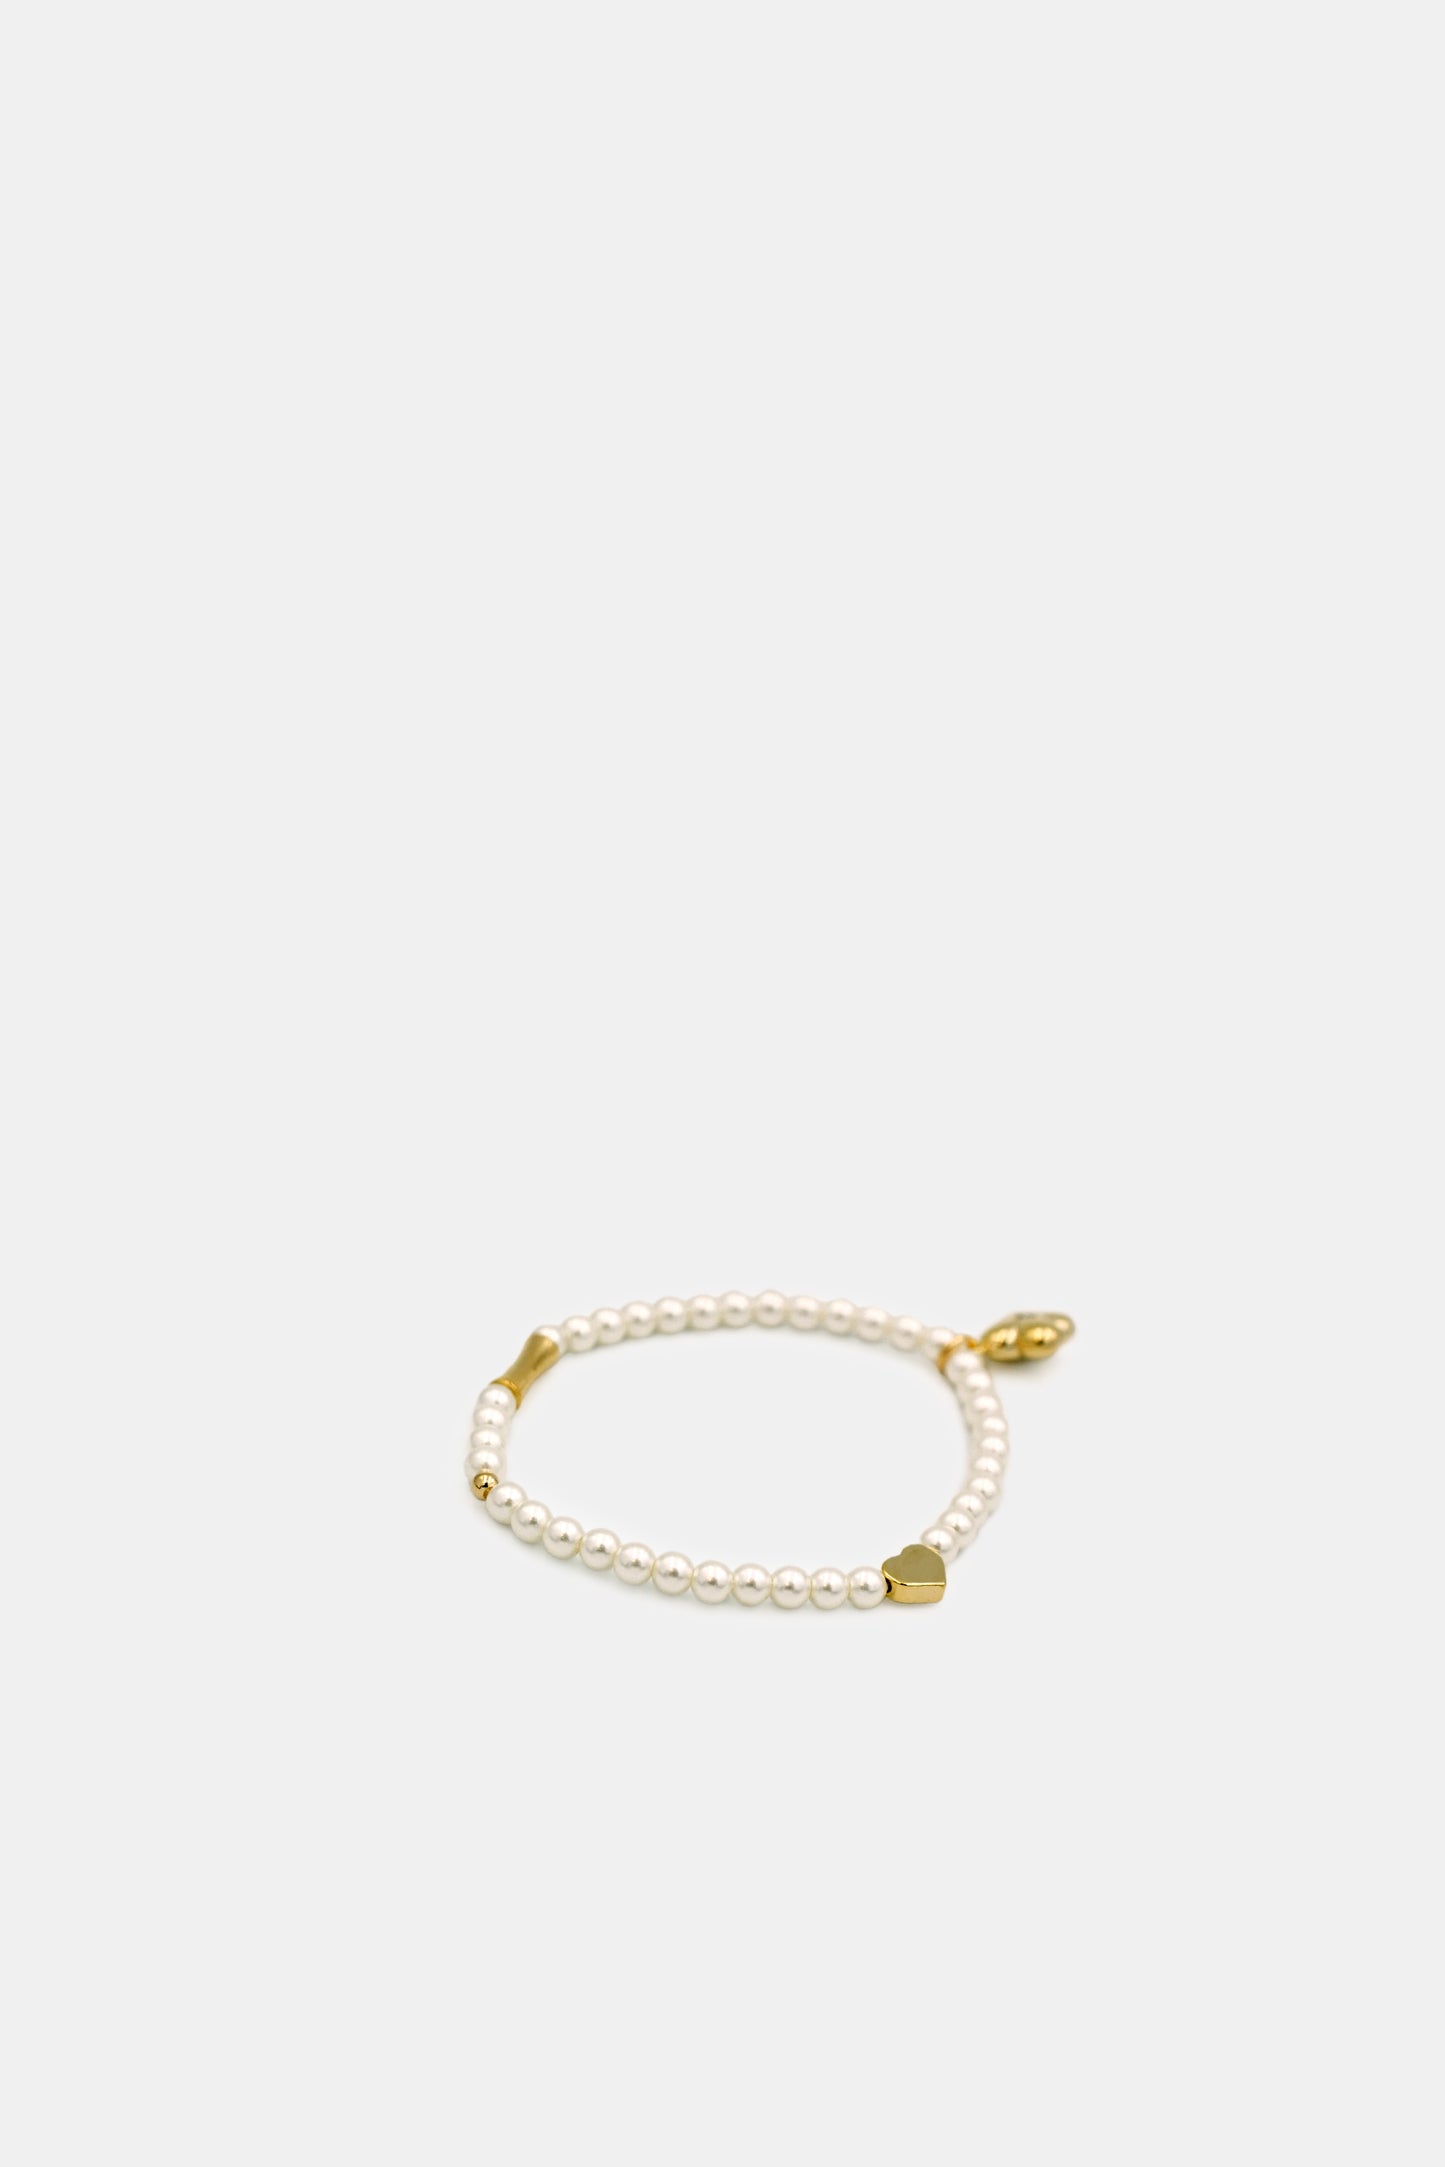 clover-pearl-bracelet-gold